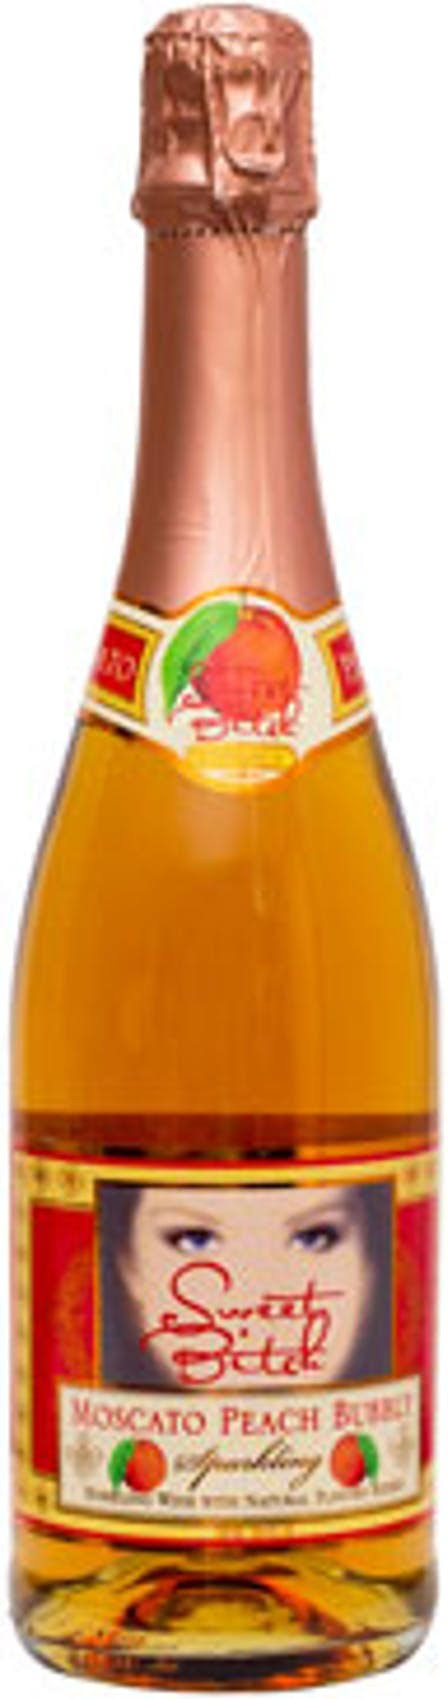 Sweet Bitch Sparkling Peach Moscato - 750 ml